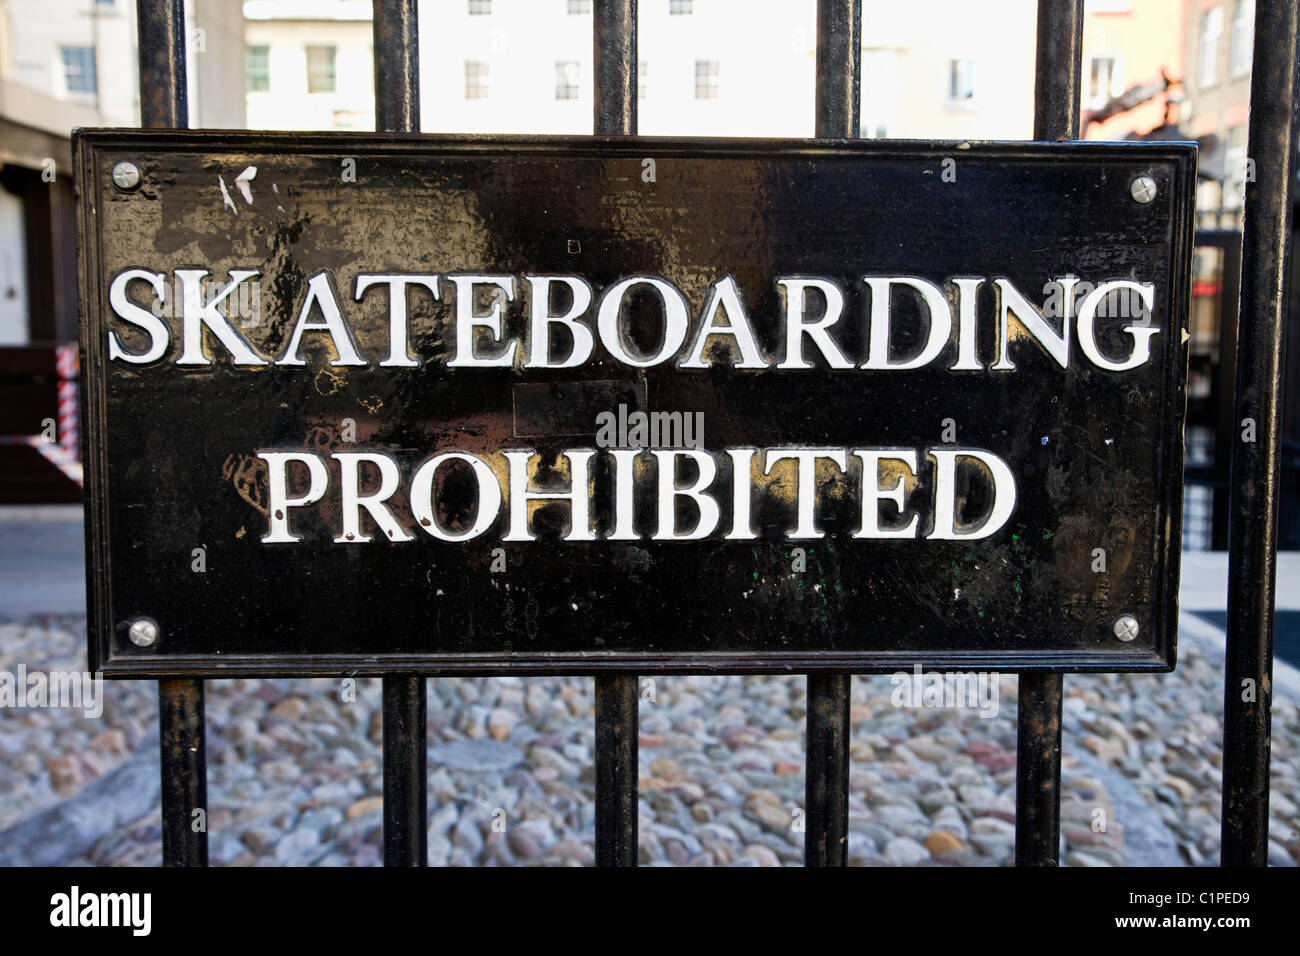 Republic of Ireland, Temple Bar, skateboarding prohibited sign on gate Stock Photo